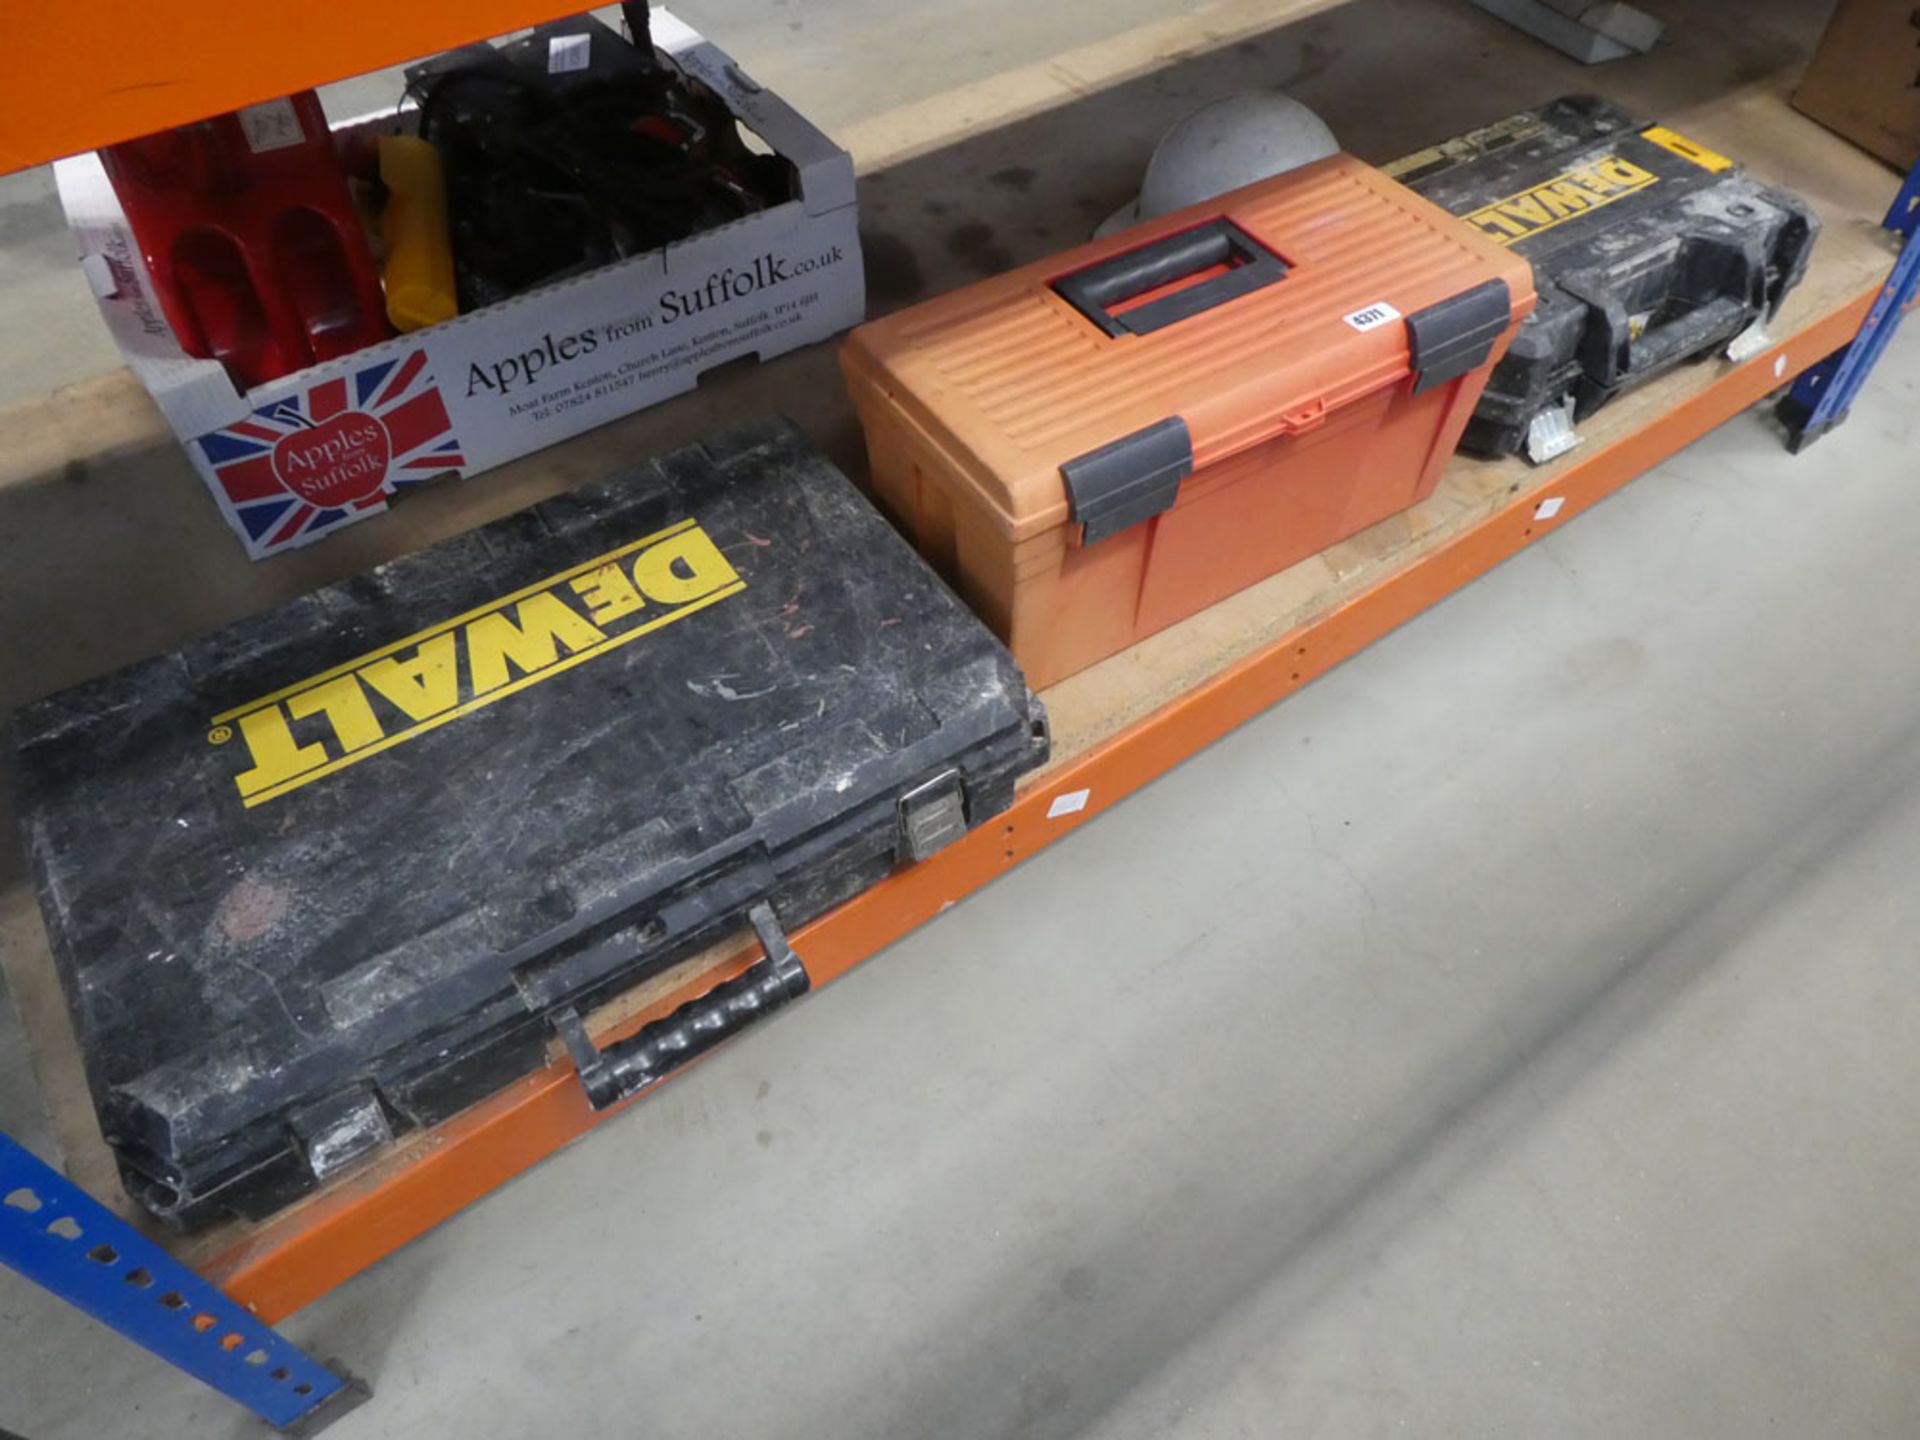 2 small Dewalt drill boxes (no drills) and small orange toolbox